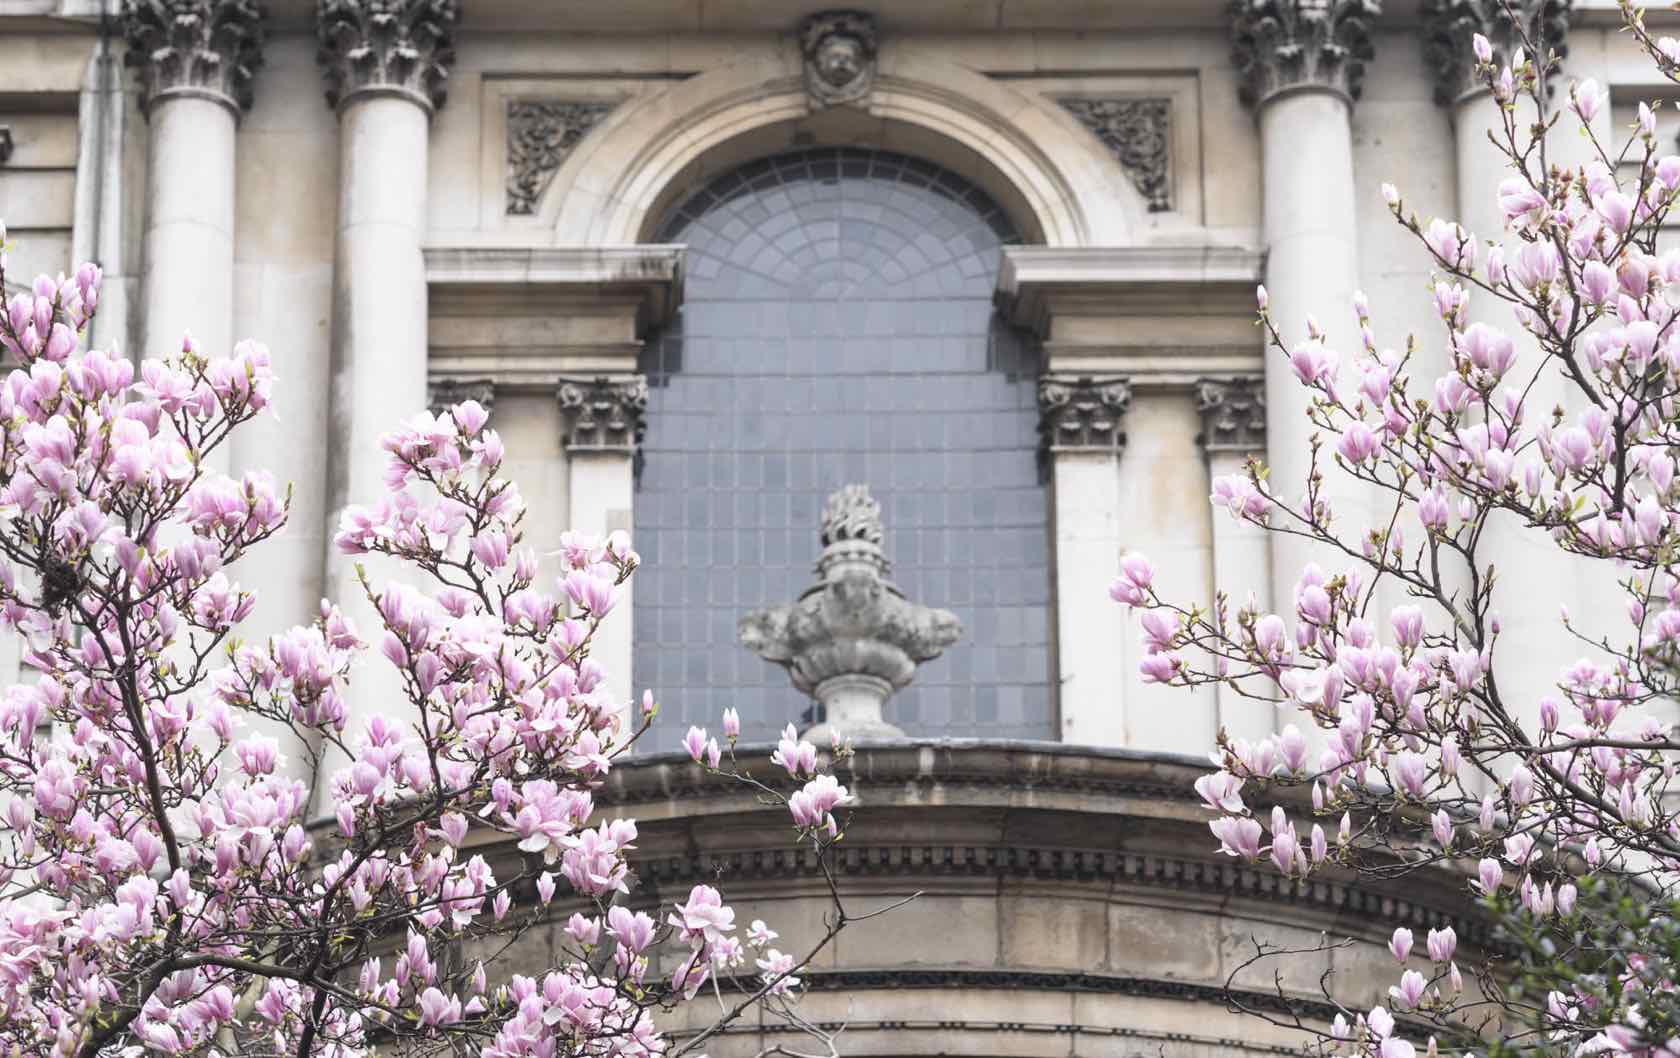 London in springtime flowers